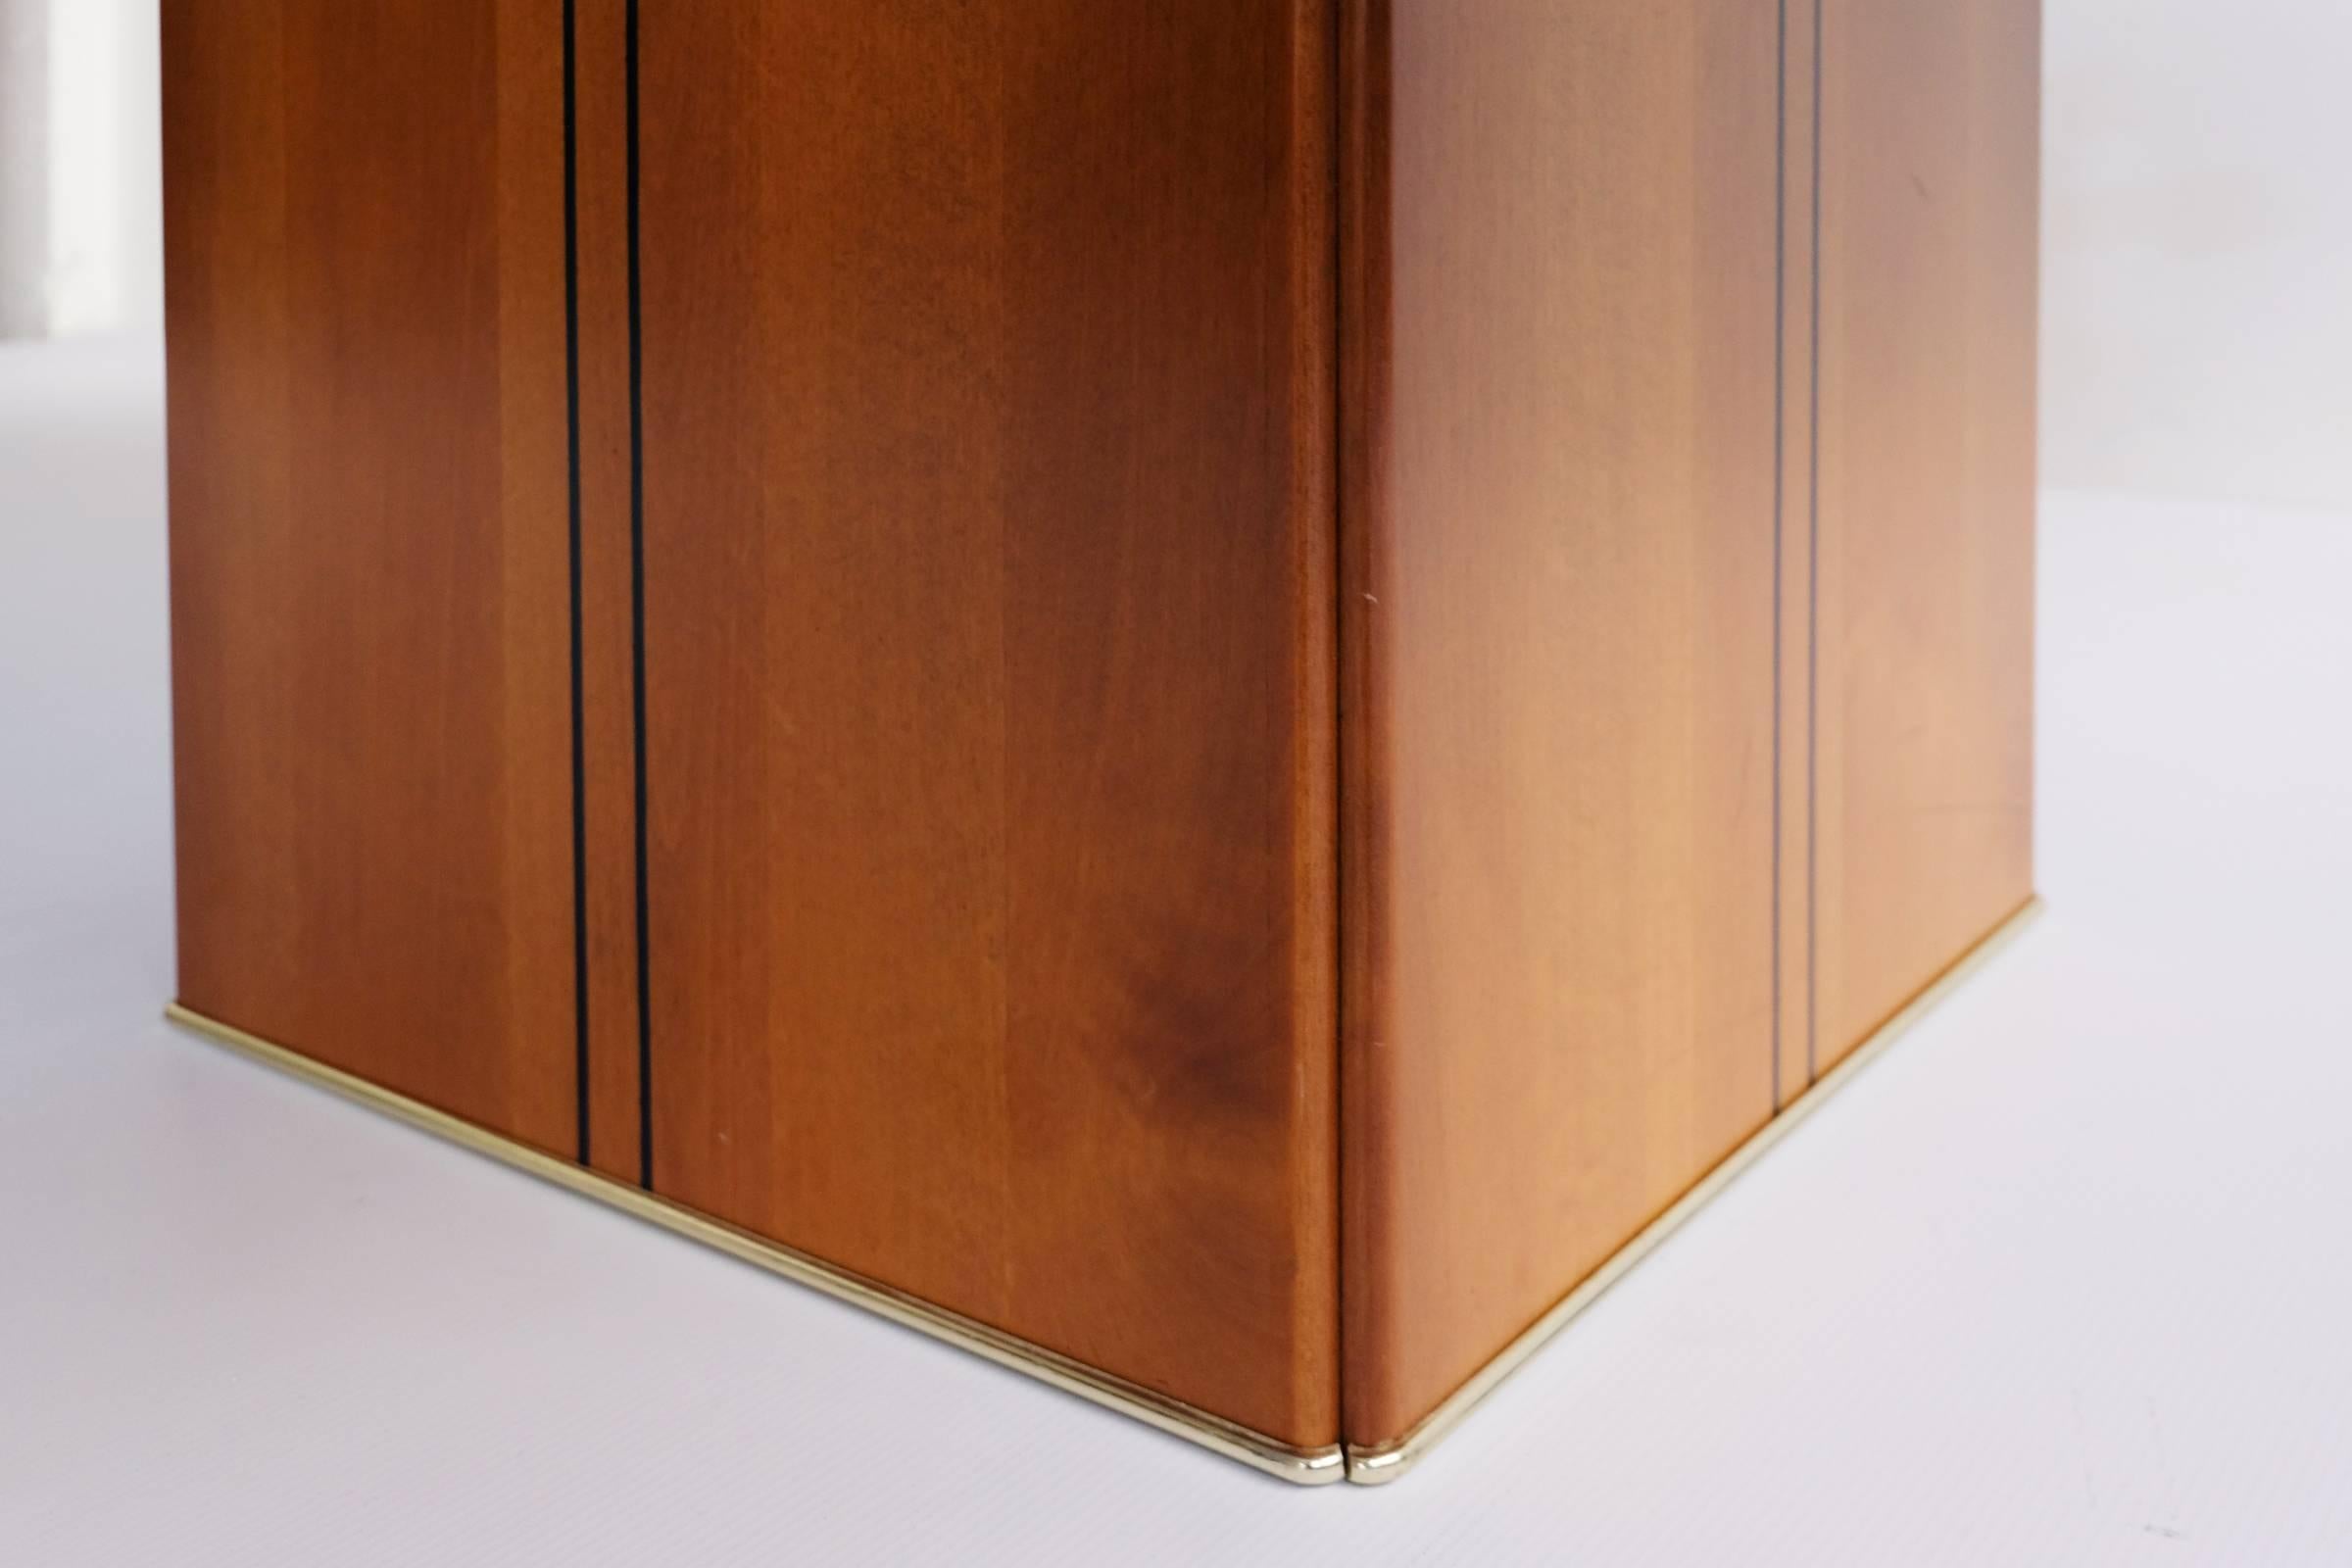 Brass Afra and Tobia Scarpa Luxurious Oval Table Mod, Artona